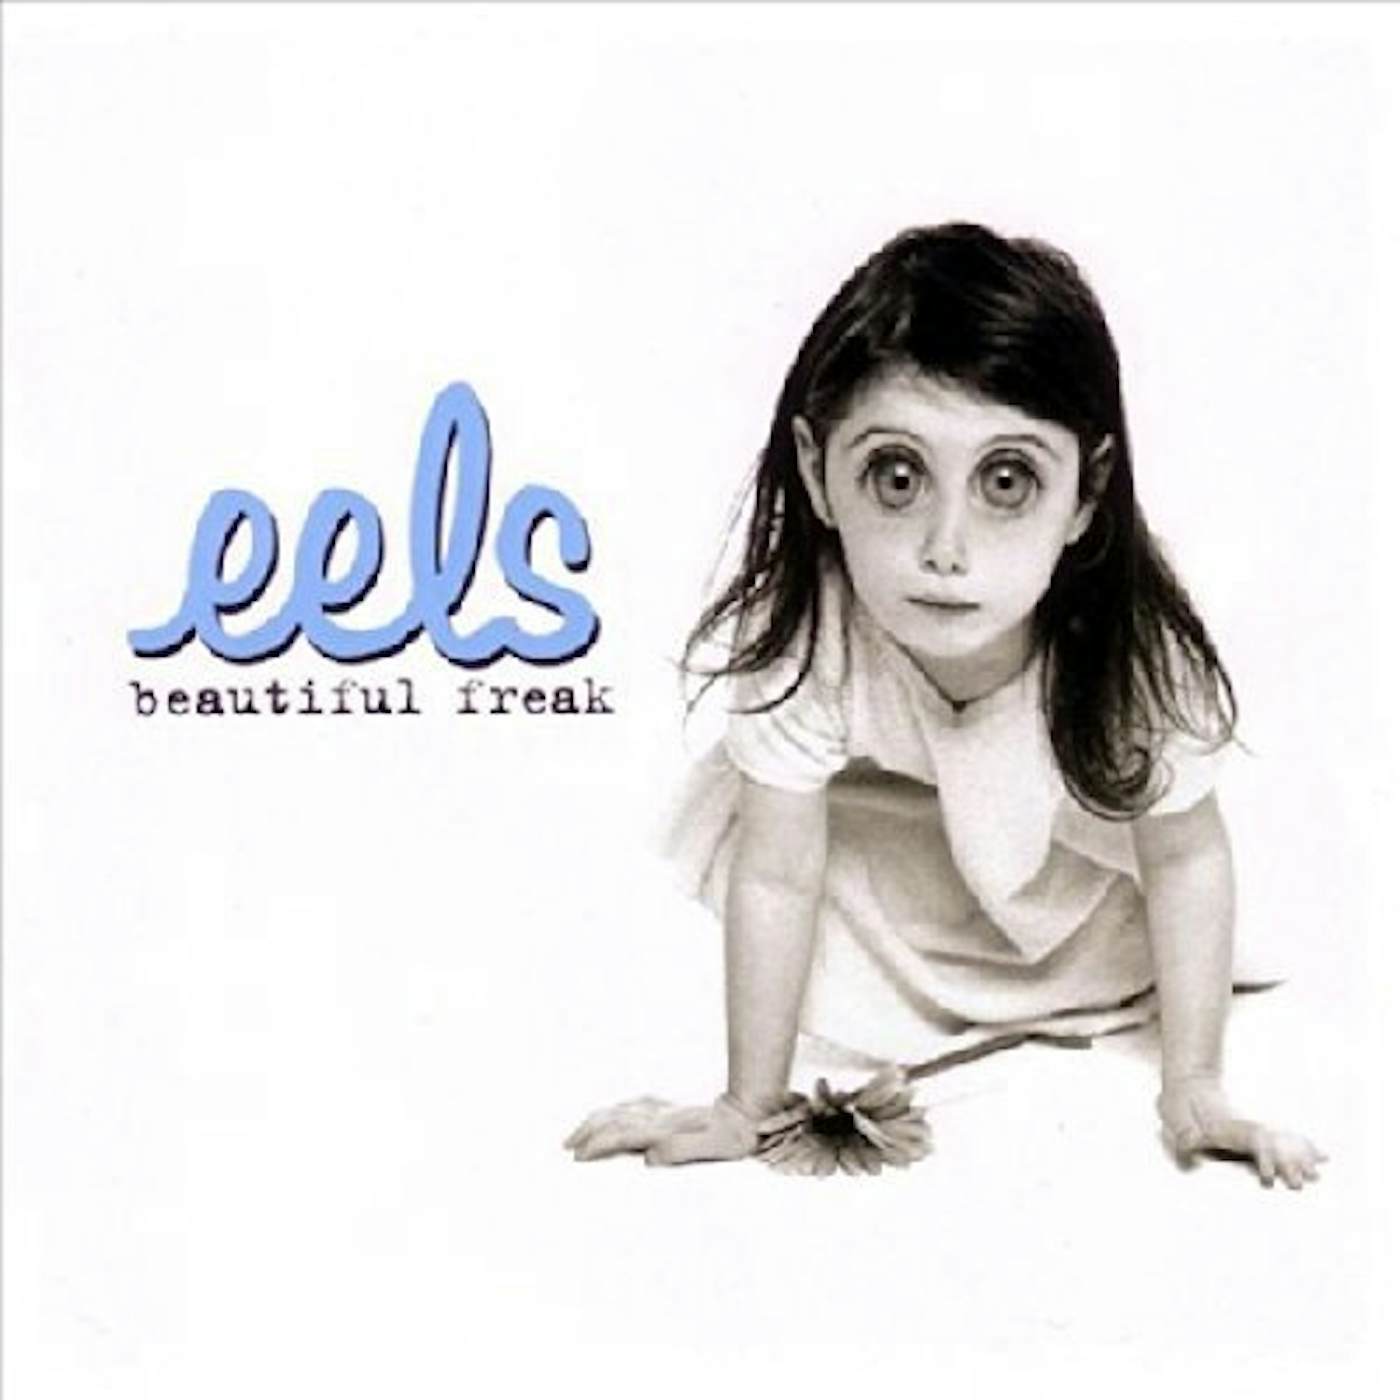 Eels Beautiful Freak Vinyl Record